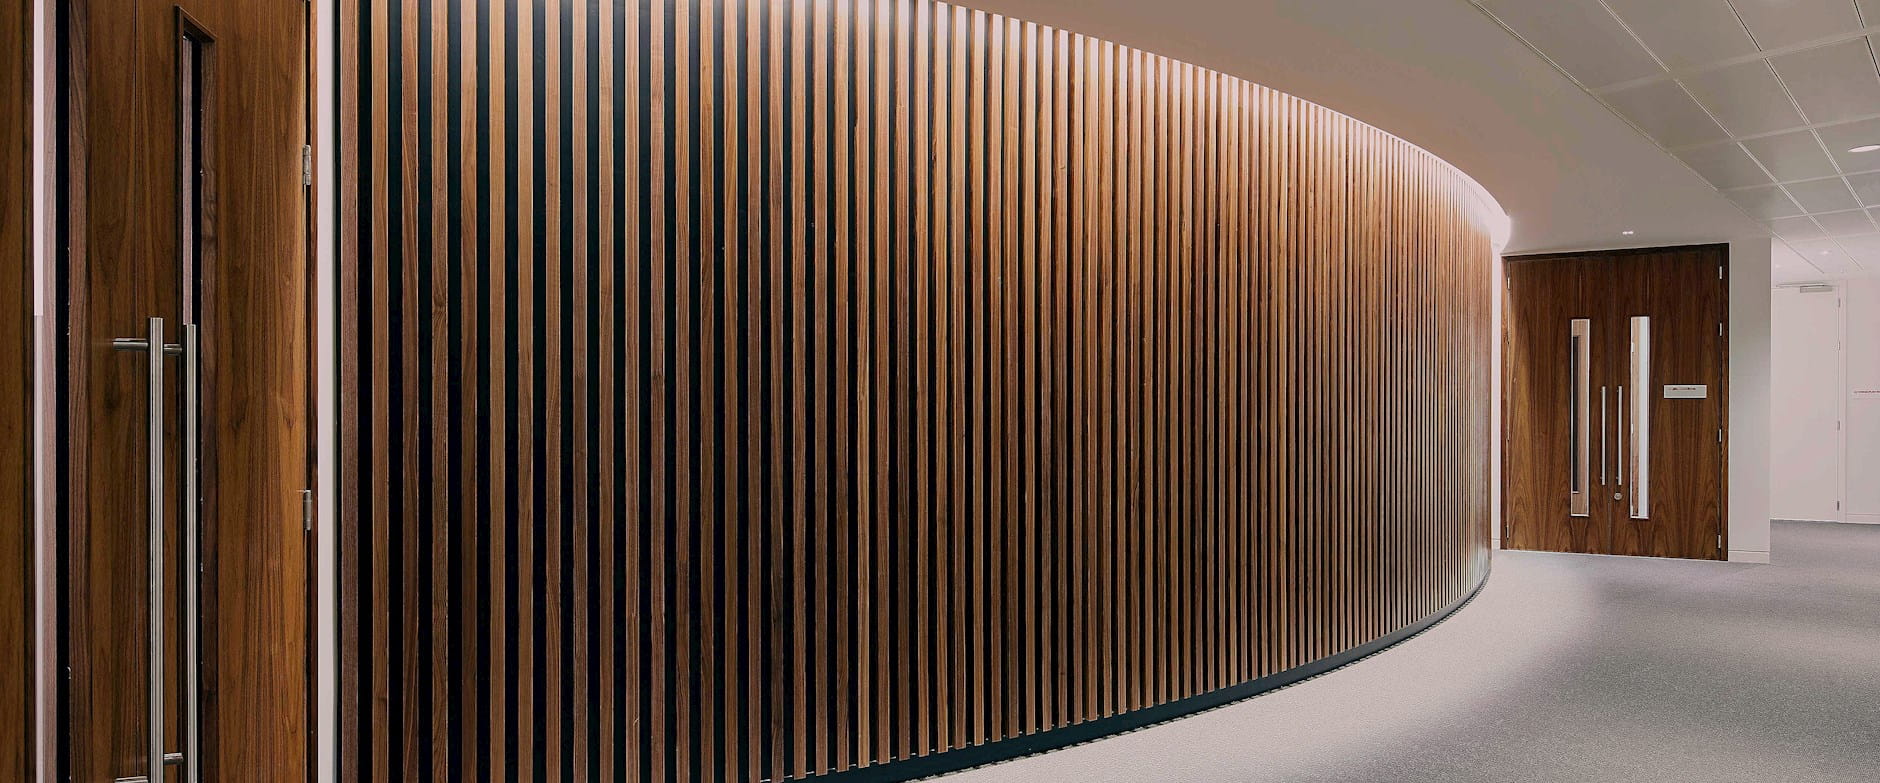 Wood slat curved wall